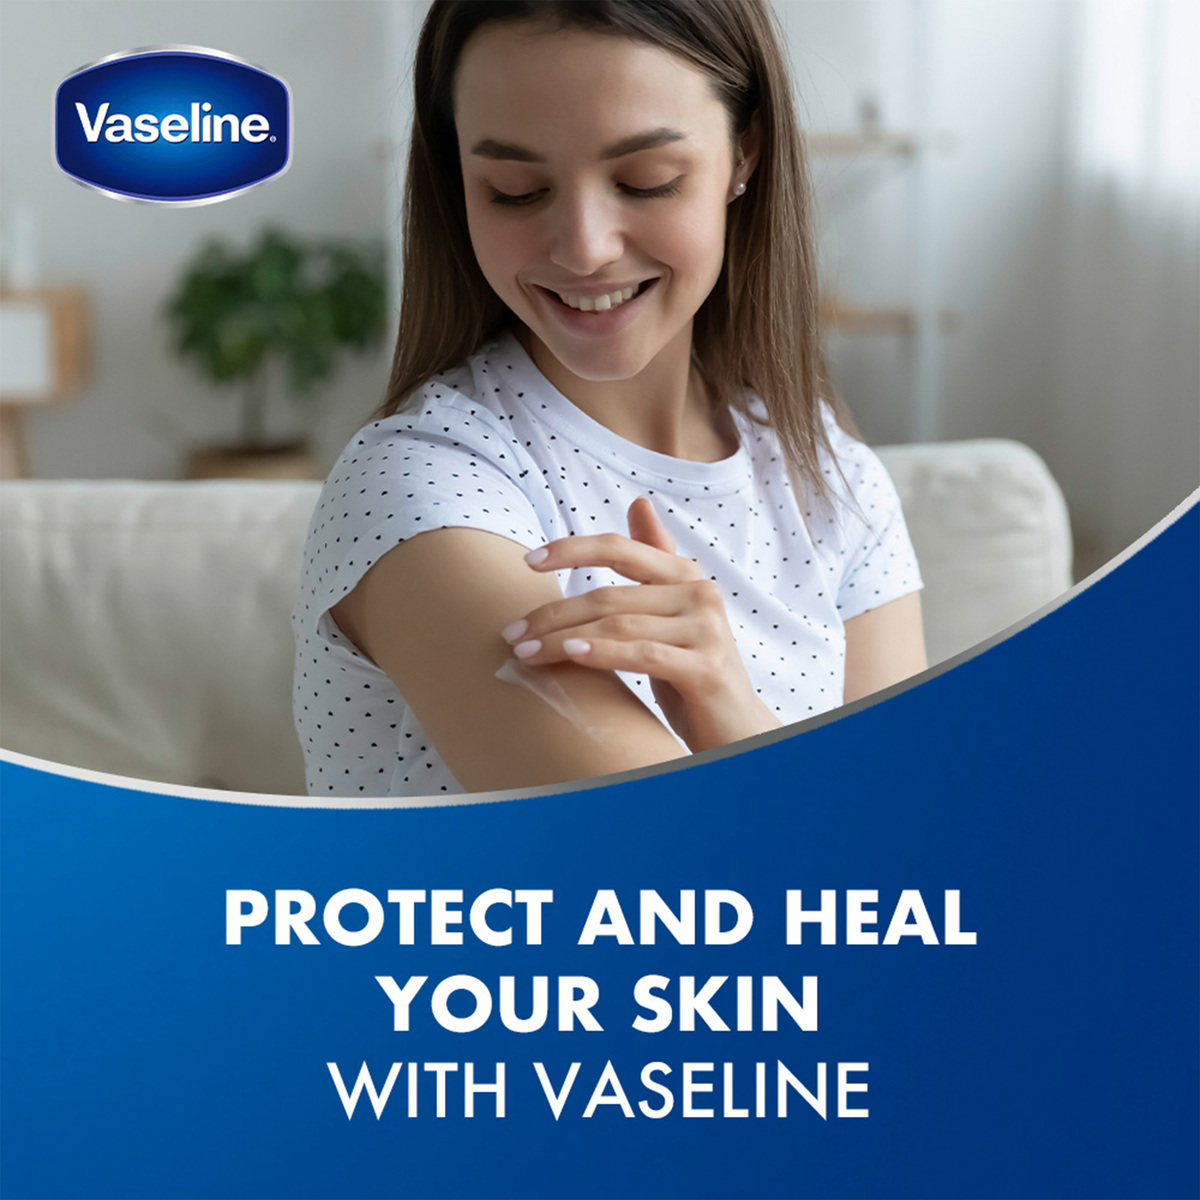 Vaseline Body Cream Intensive Care Essential Healing 120 ml